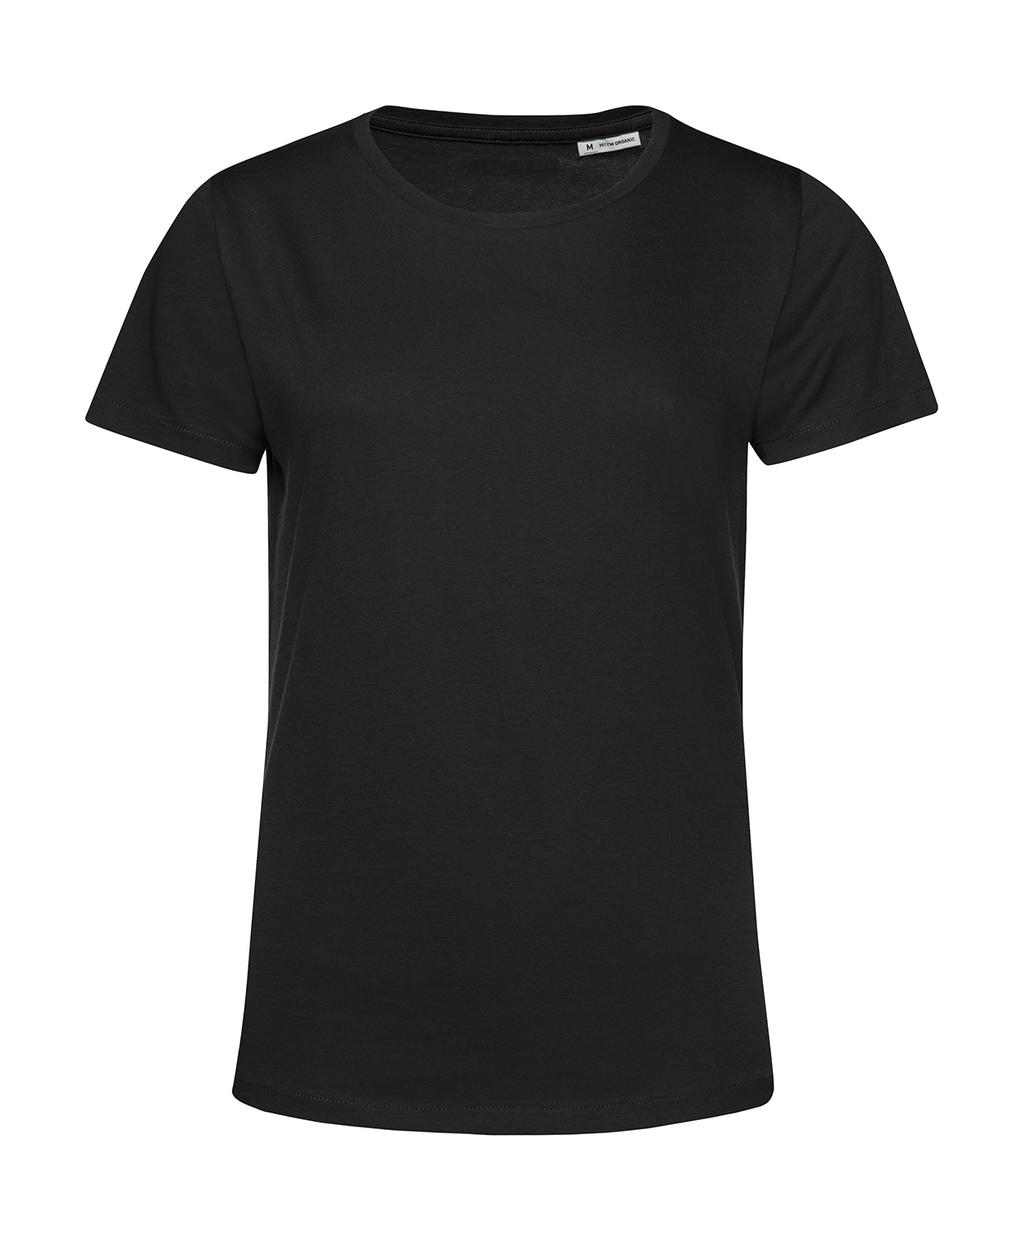 Tričko dámské BC Organic Inspire E150 - černé, XXL